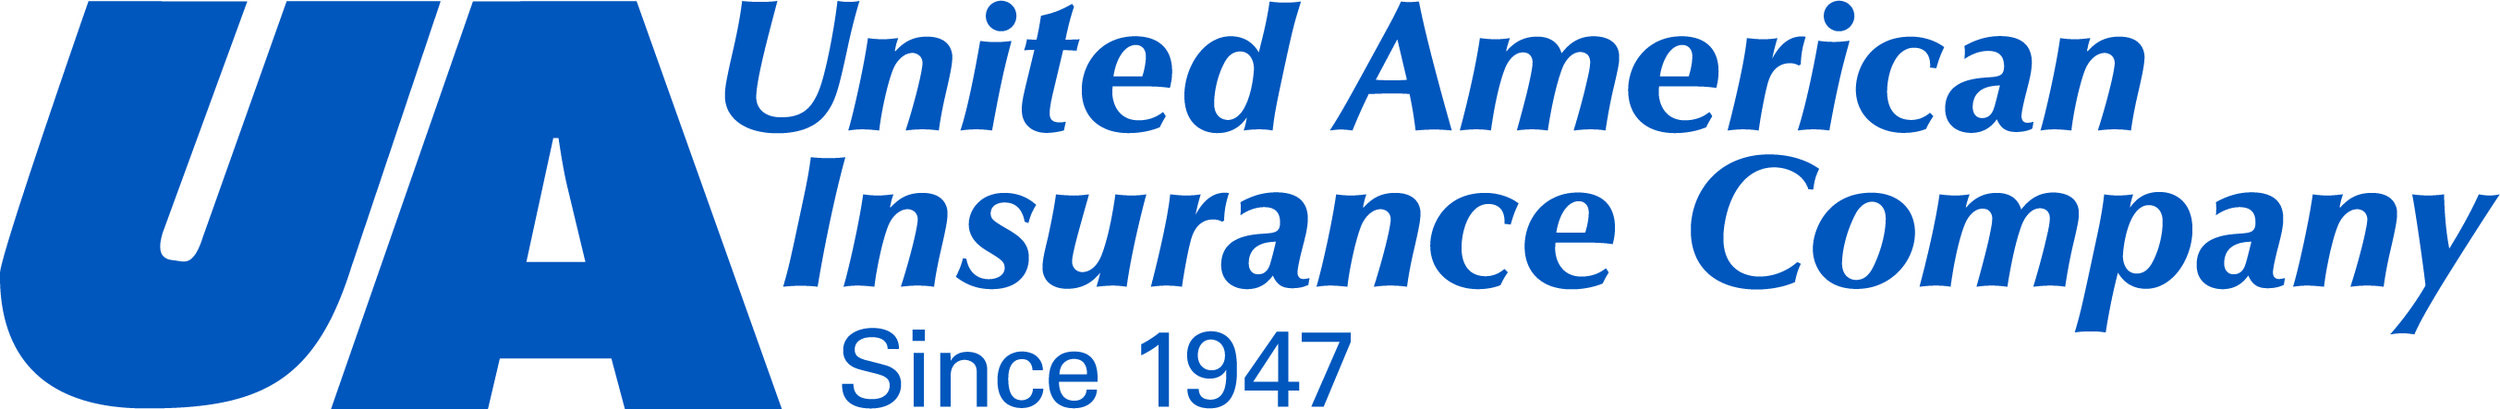 United American Insurance Company Logo (Globe Blue CMYK).jpg